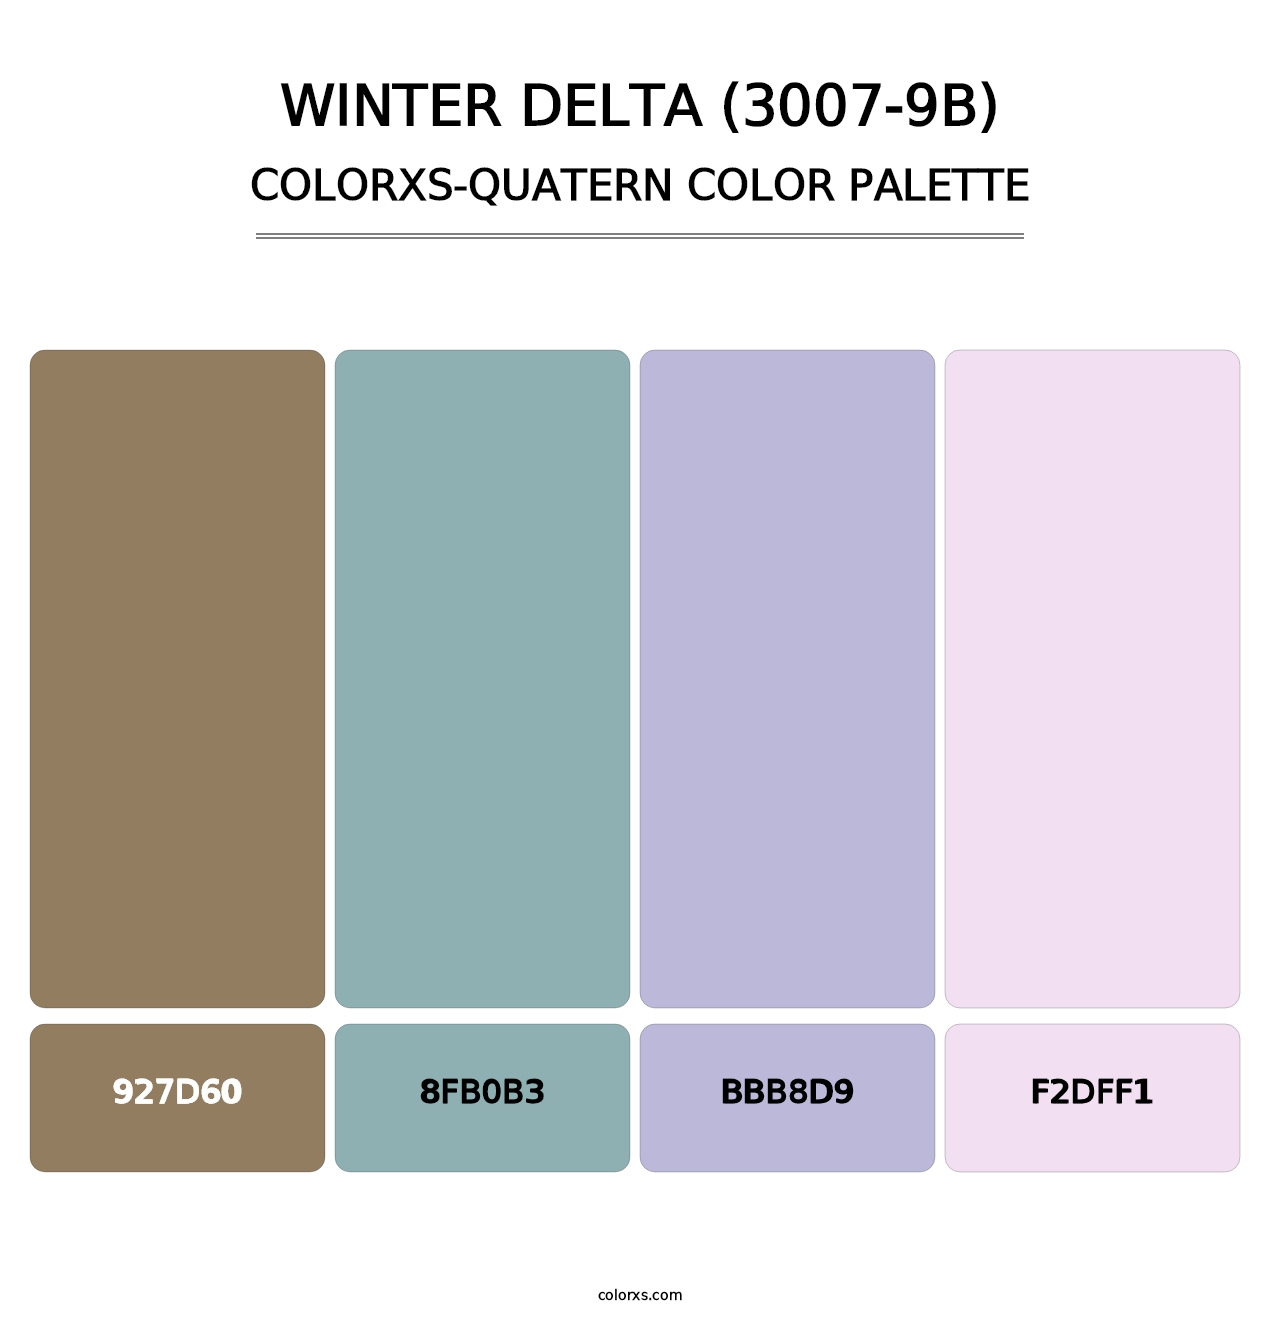 Winter Delta (3007-9B) - Colorxs Quatern Palette